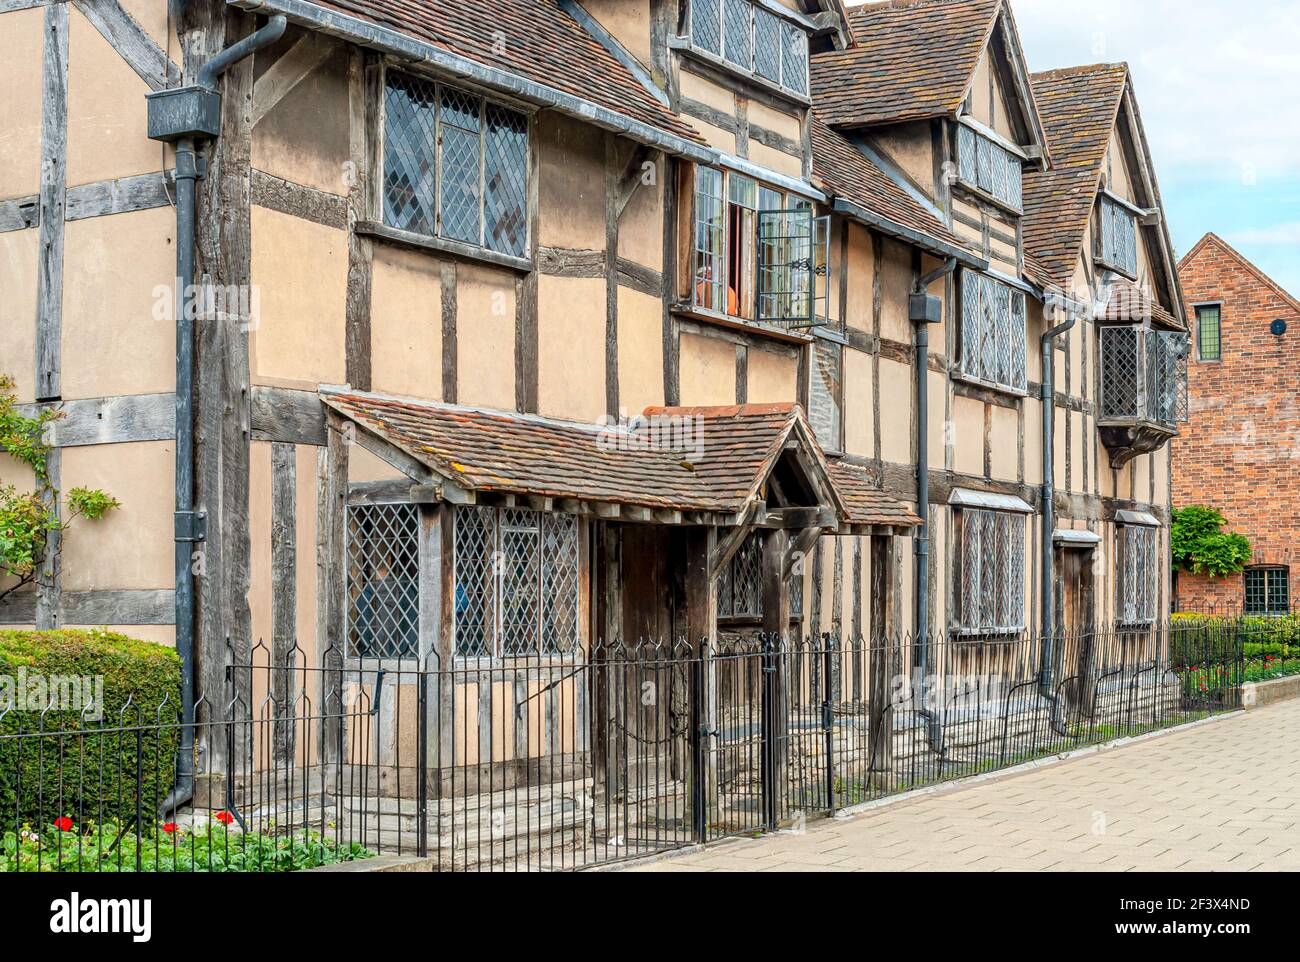 Lugar de nacimiento de Shakespeare donde nació en 1564 en Stratford Upon Avon, Inglaterra Foto de stock